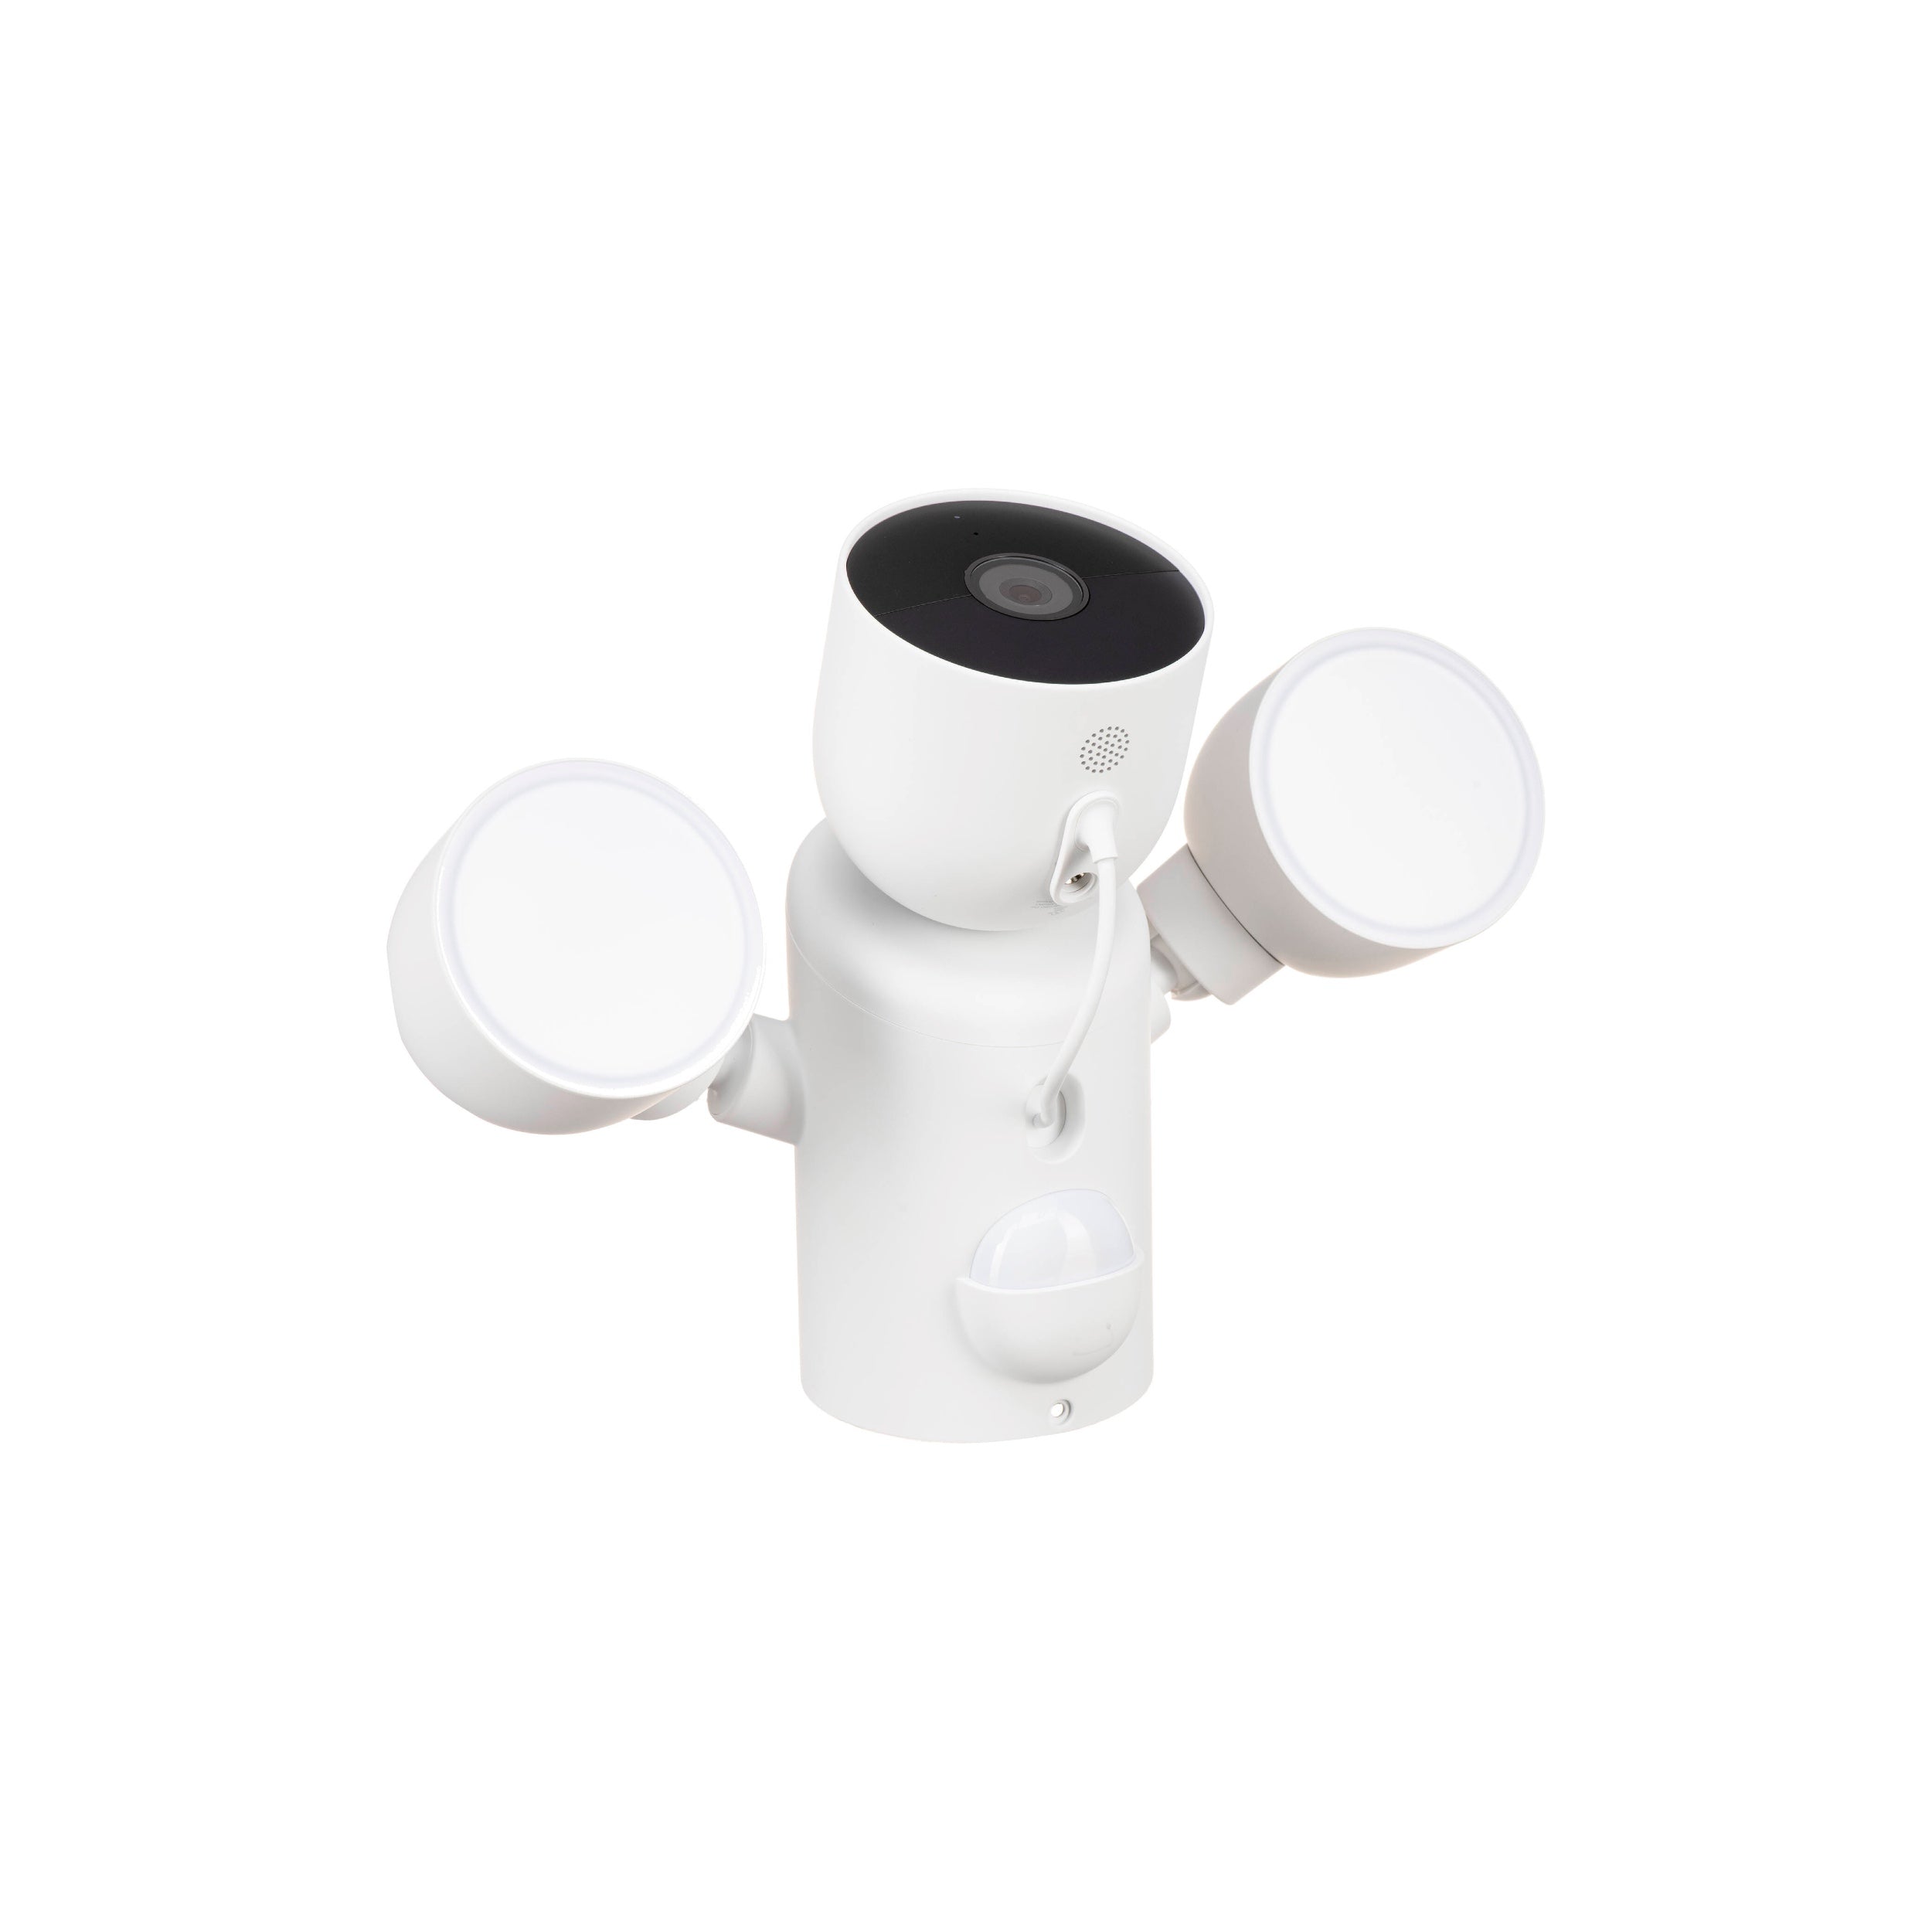 Google 1080p Nest Cam with Floodlight Camera & Night Vision